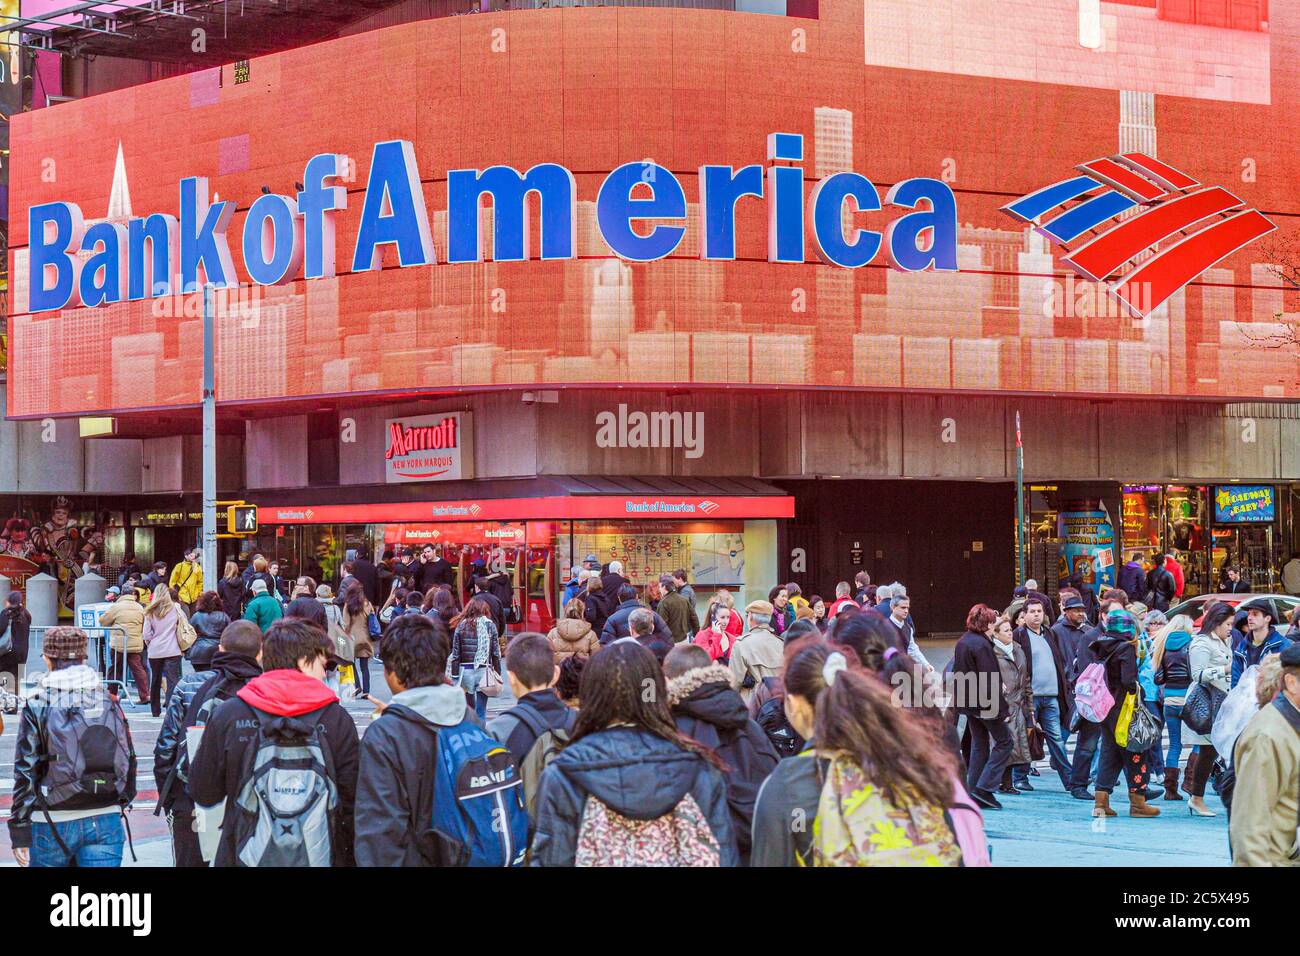 New York City,NYC NY Manhattan,Midtown,Times Square,illuminated sign,LED,Bank of America,street scene,crossing,crowded,group,NY110405076 Stock Photo